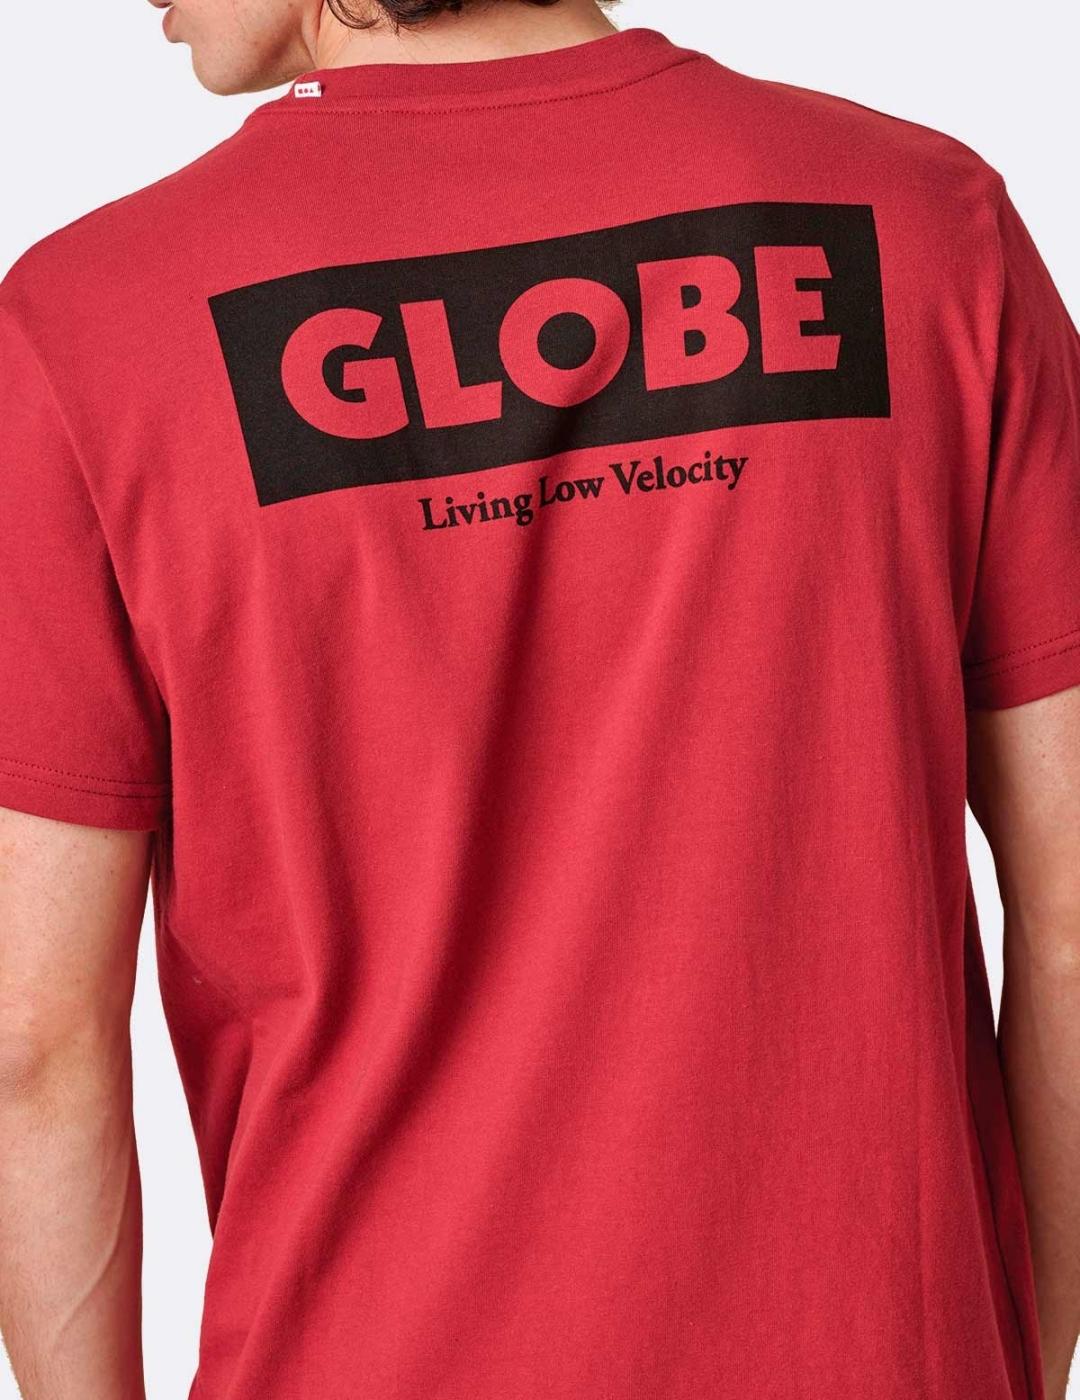 Camiseta GLOBE LIVING LOW VELOCITY  - Rhubarb